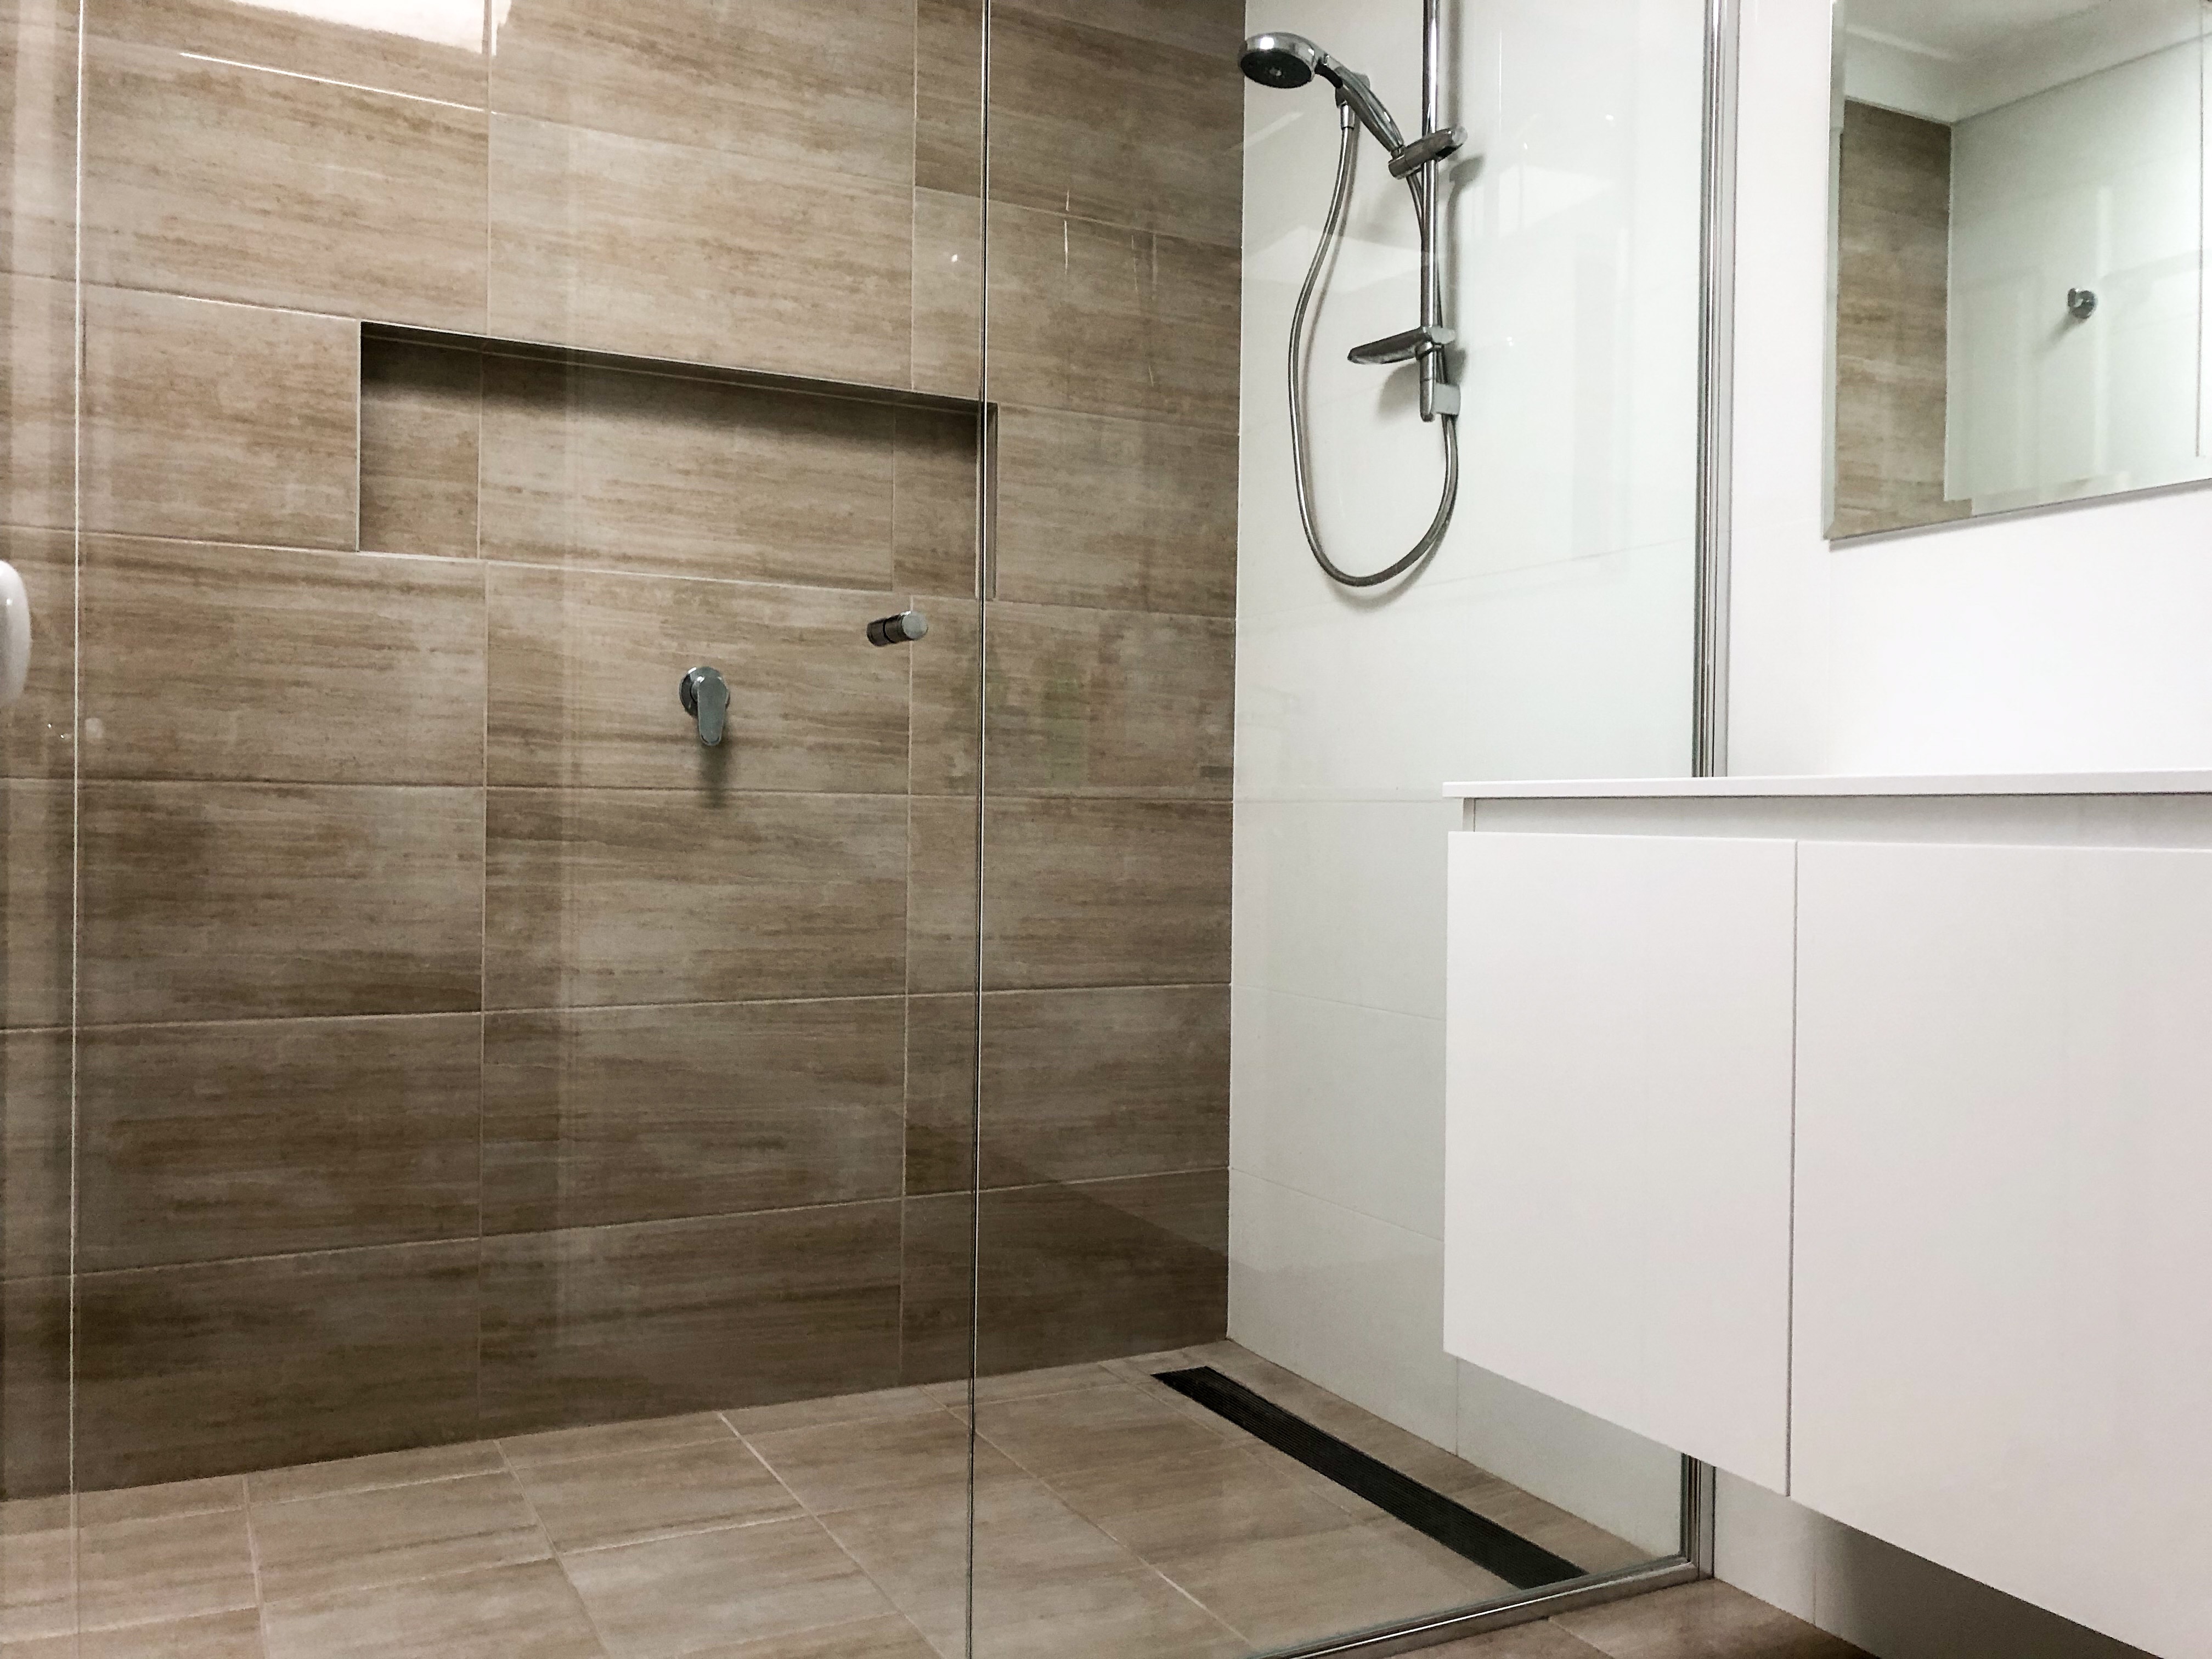 Advantages of Linear Shower Drains